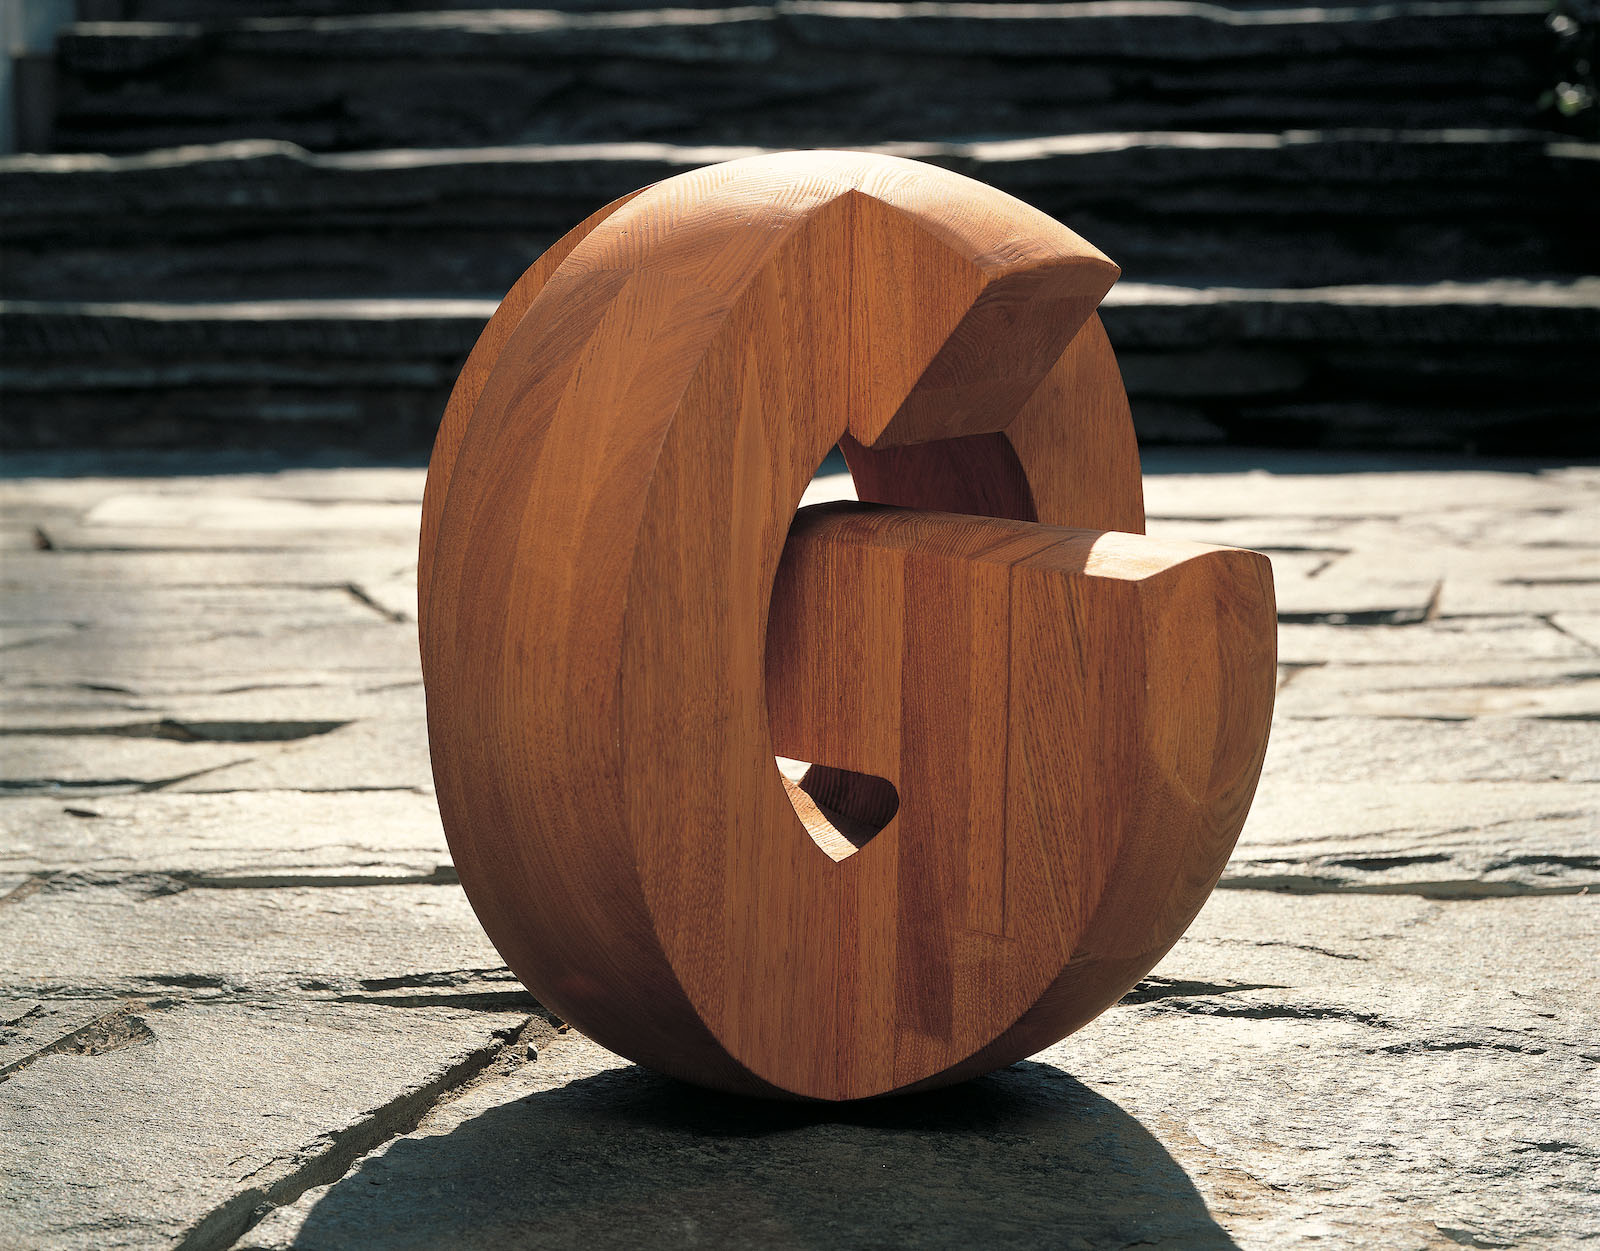 Wooden Alphabet Sculpture "GO" | Takenobu Igarashi